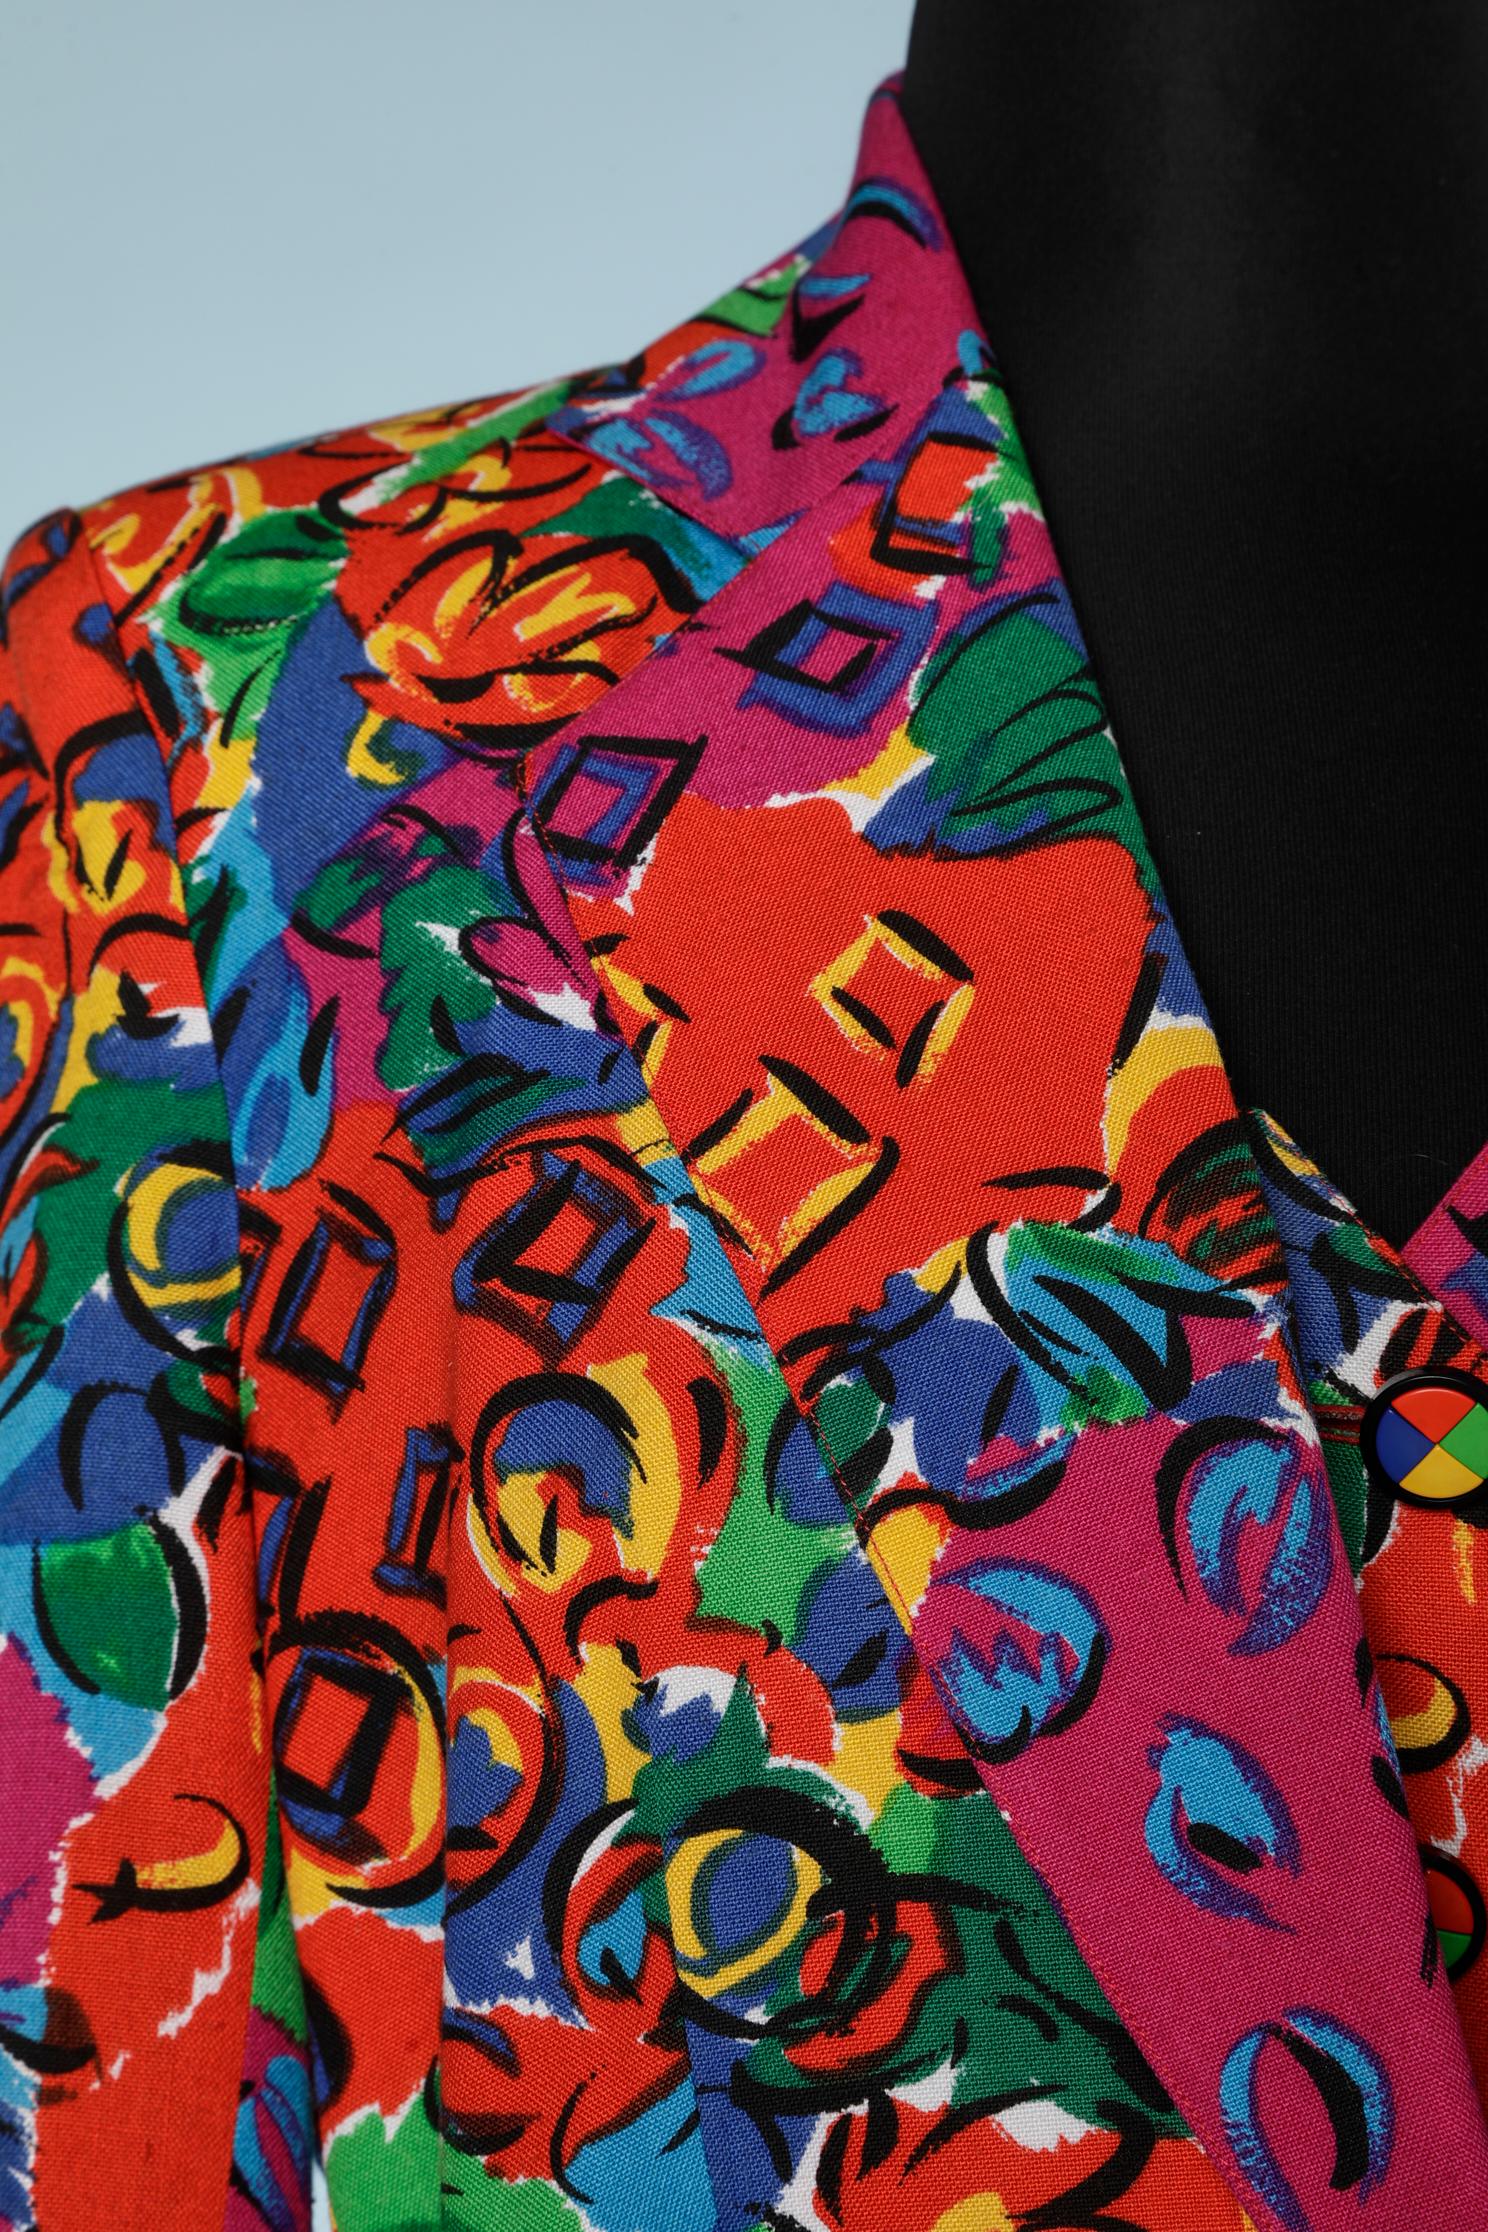 Multicolor printed cotton ensemble (jacket and dress)
SIZE 40 (M)